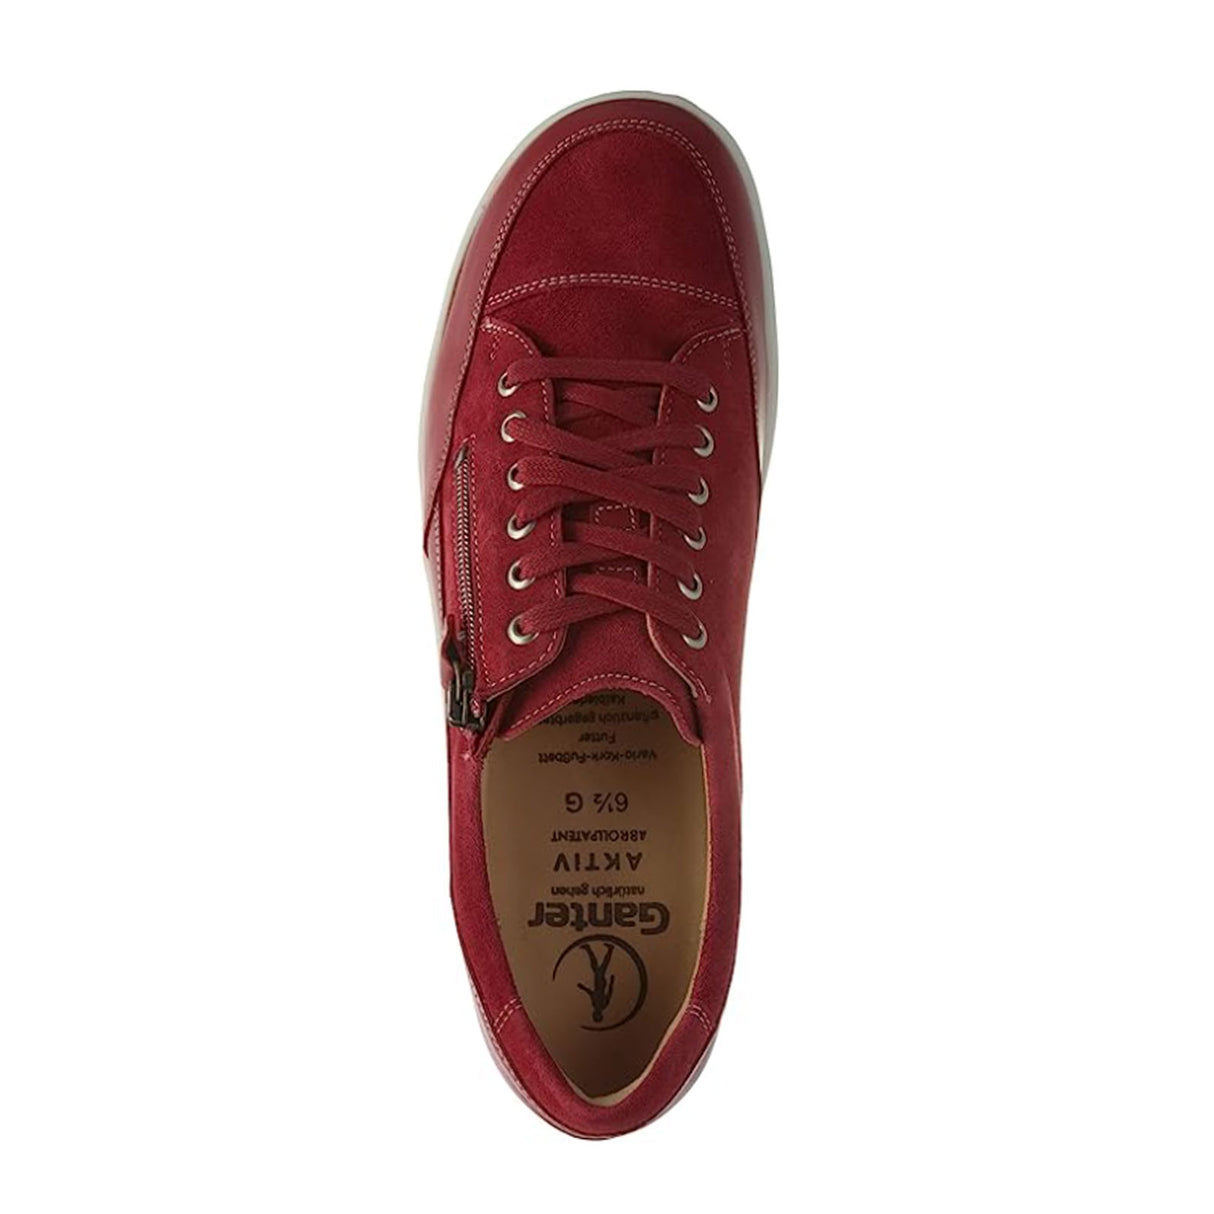 Ganter Gisa 7 Active Sneaker (Women) - Red Dress-Casual - Sneakers - The Heel Shoe Fitters